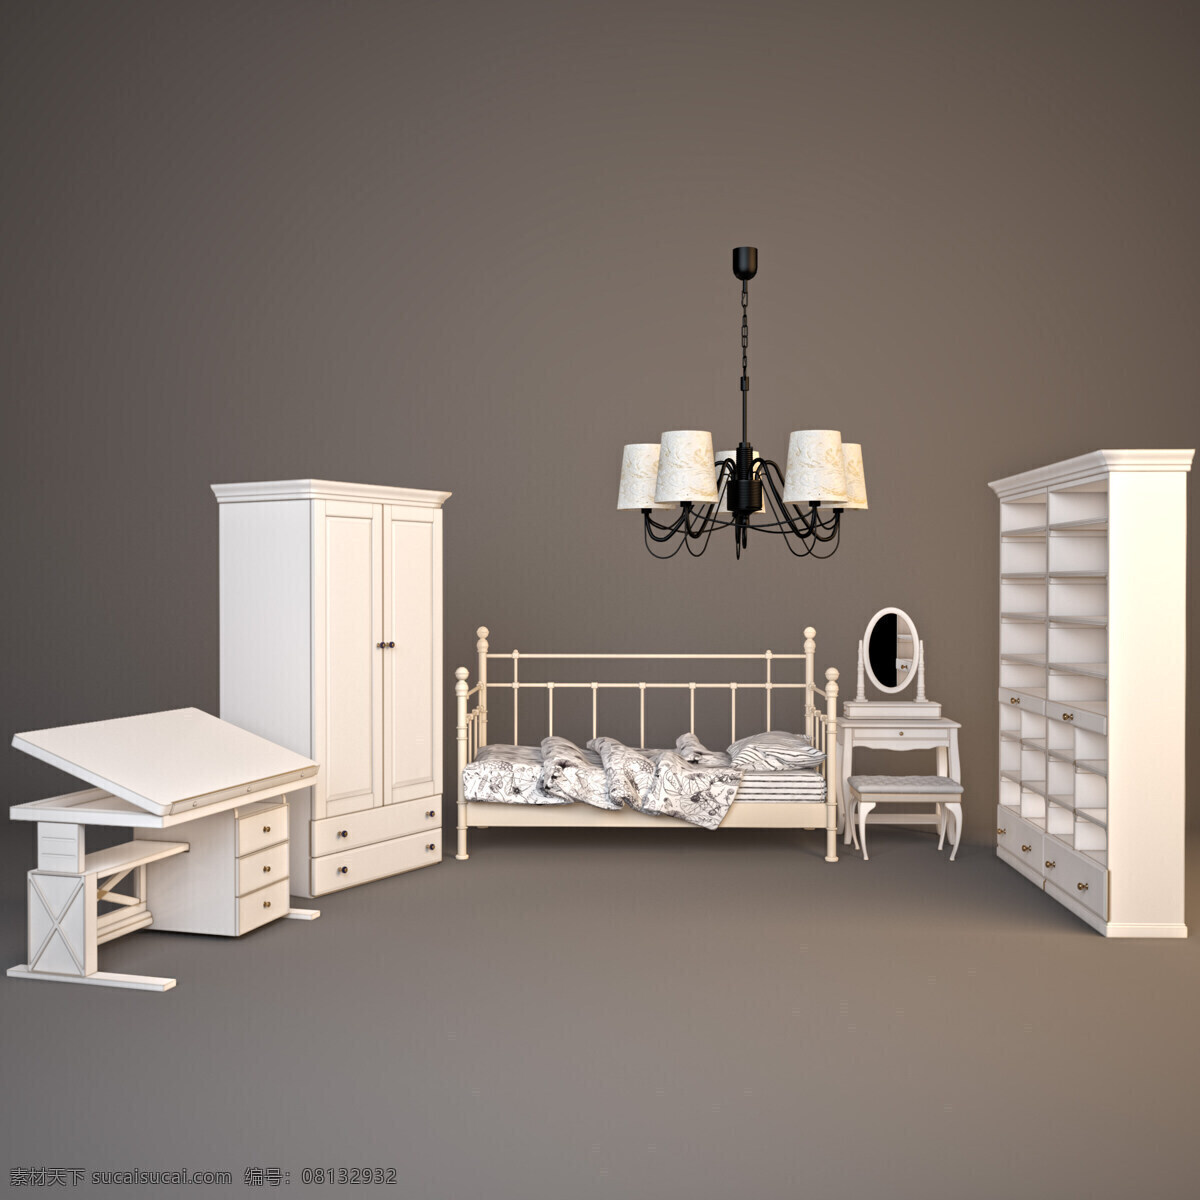 3d 渲染 简约 儿童 卧室 吊灯 床 衣柜 3d渲染 模型 电脑桌 装饰柜